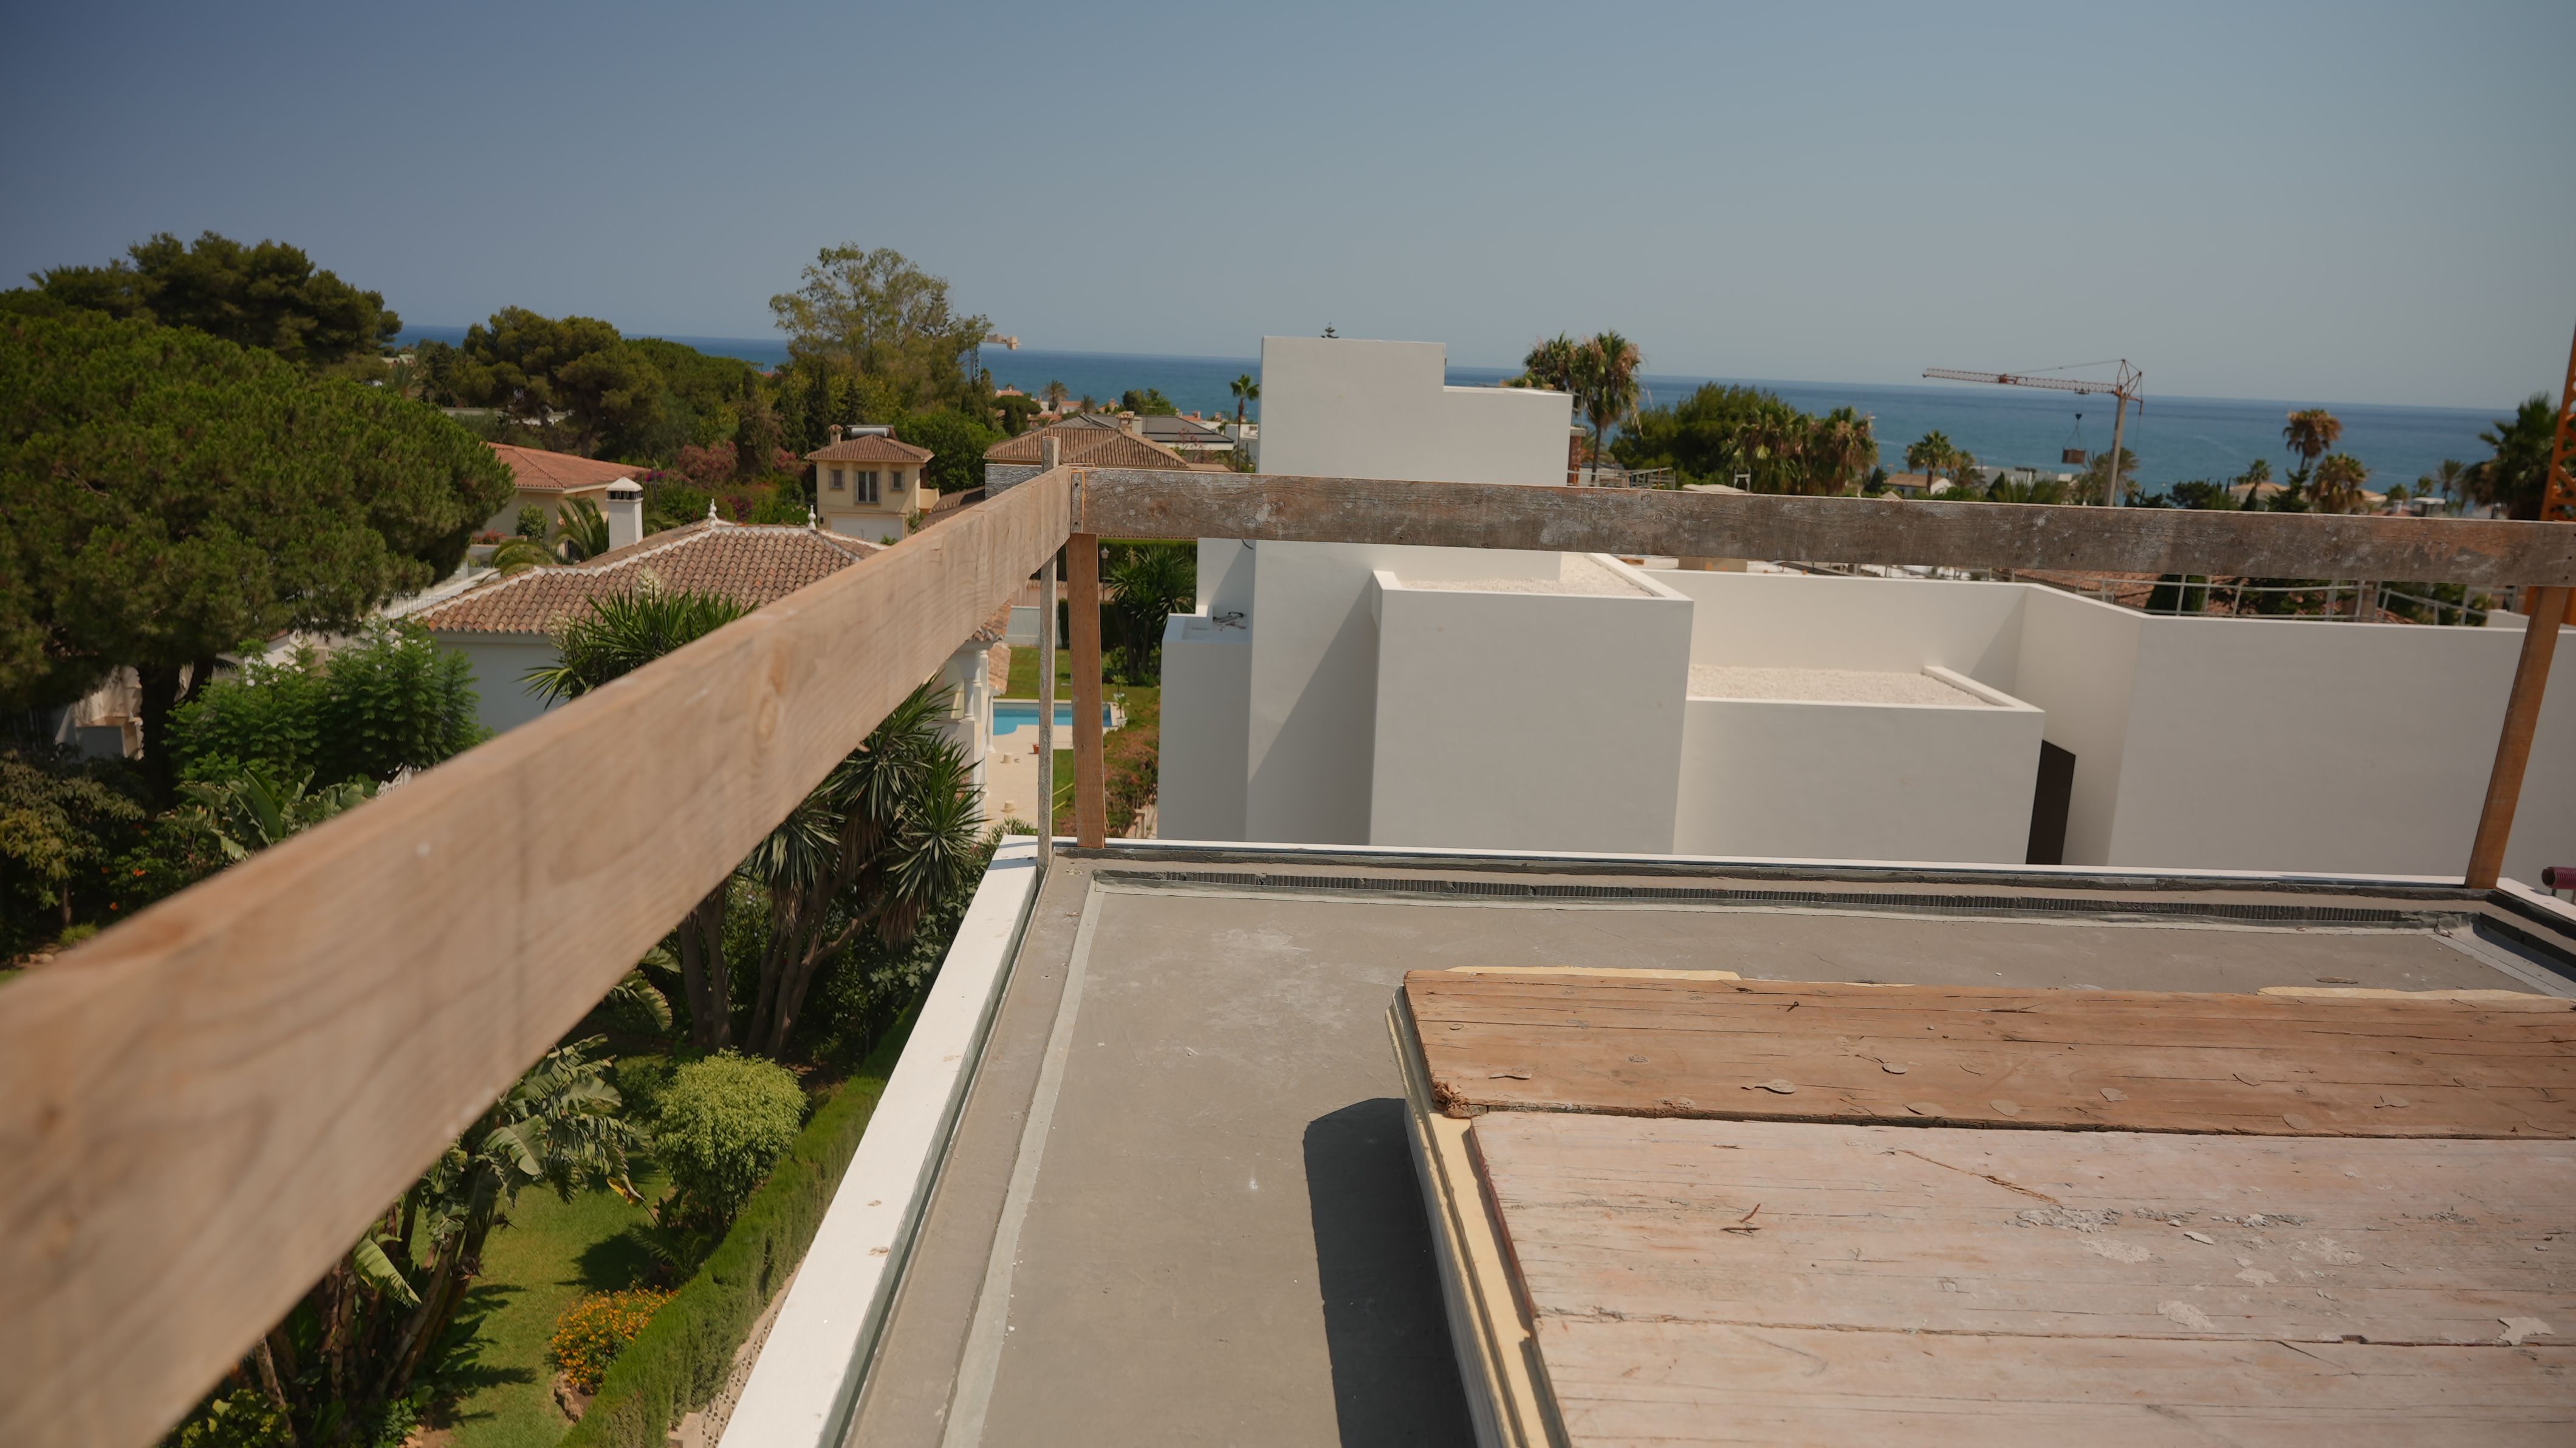 Newly built beachside villa, turnkey, in Marbella east